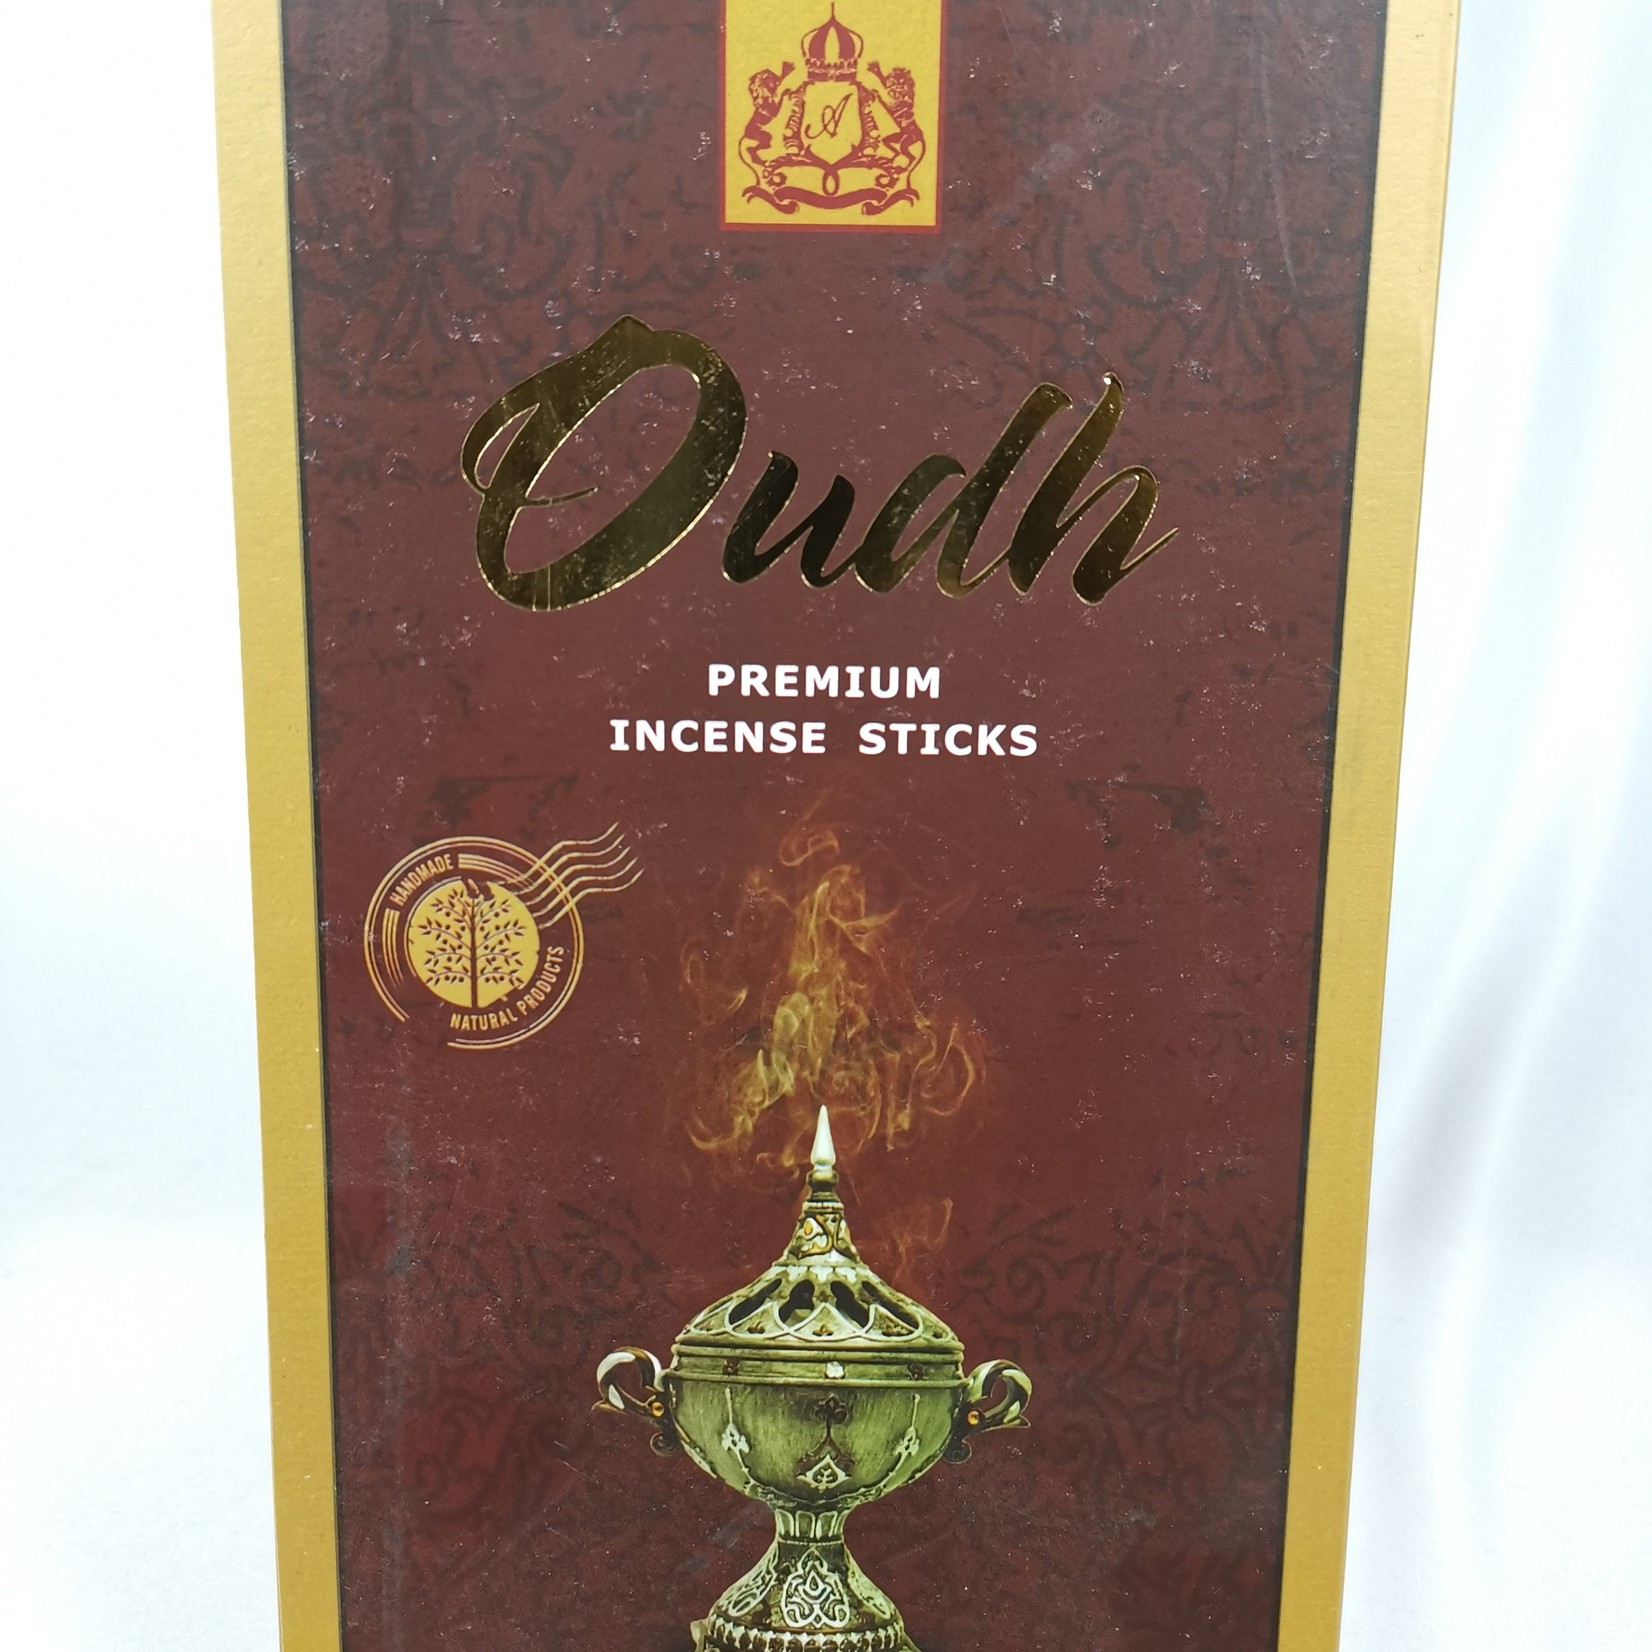 Oudh Premium Incense Sticks